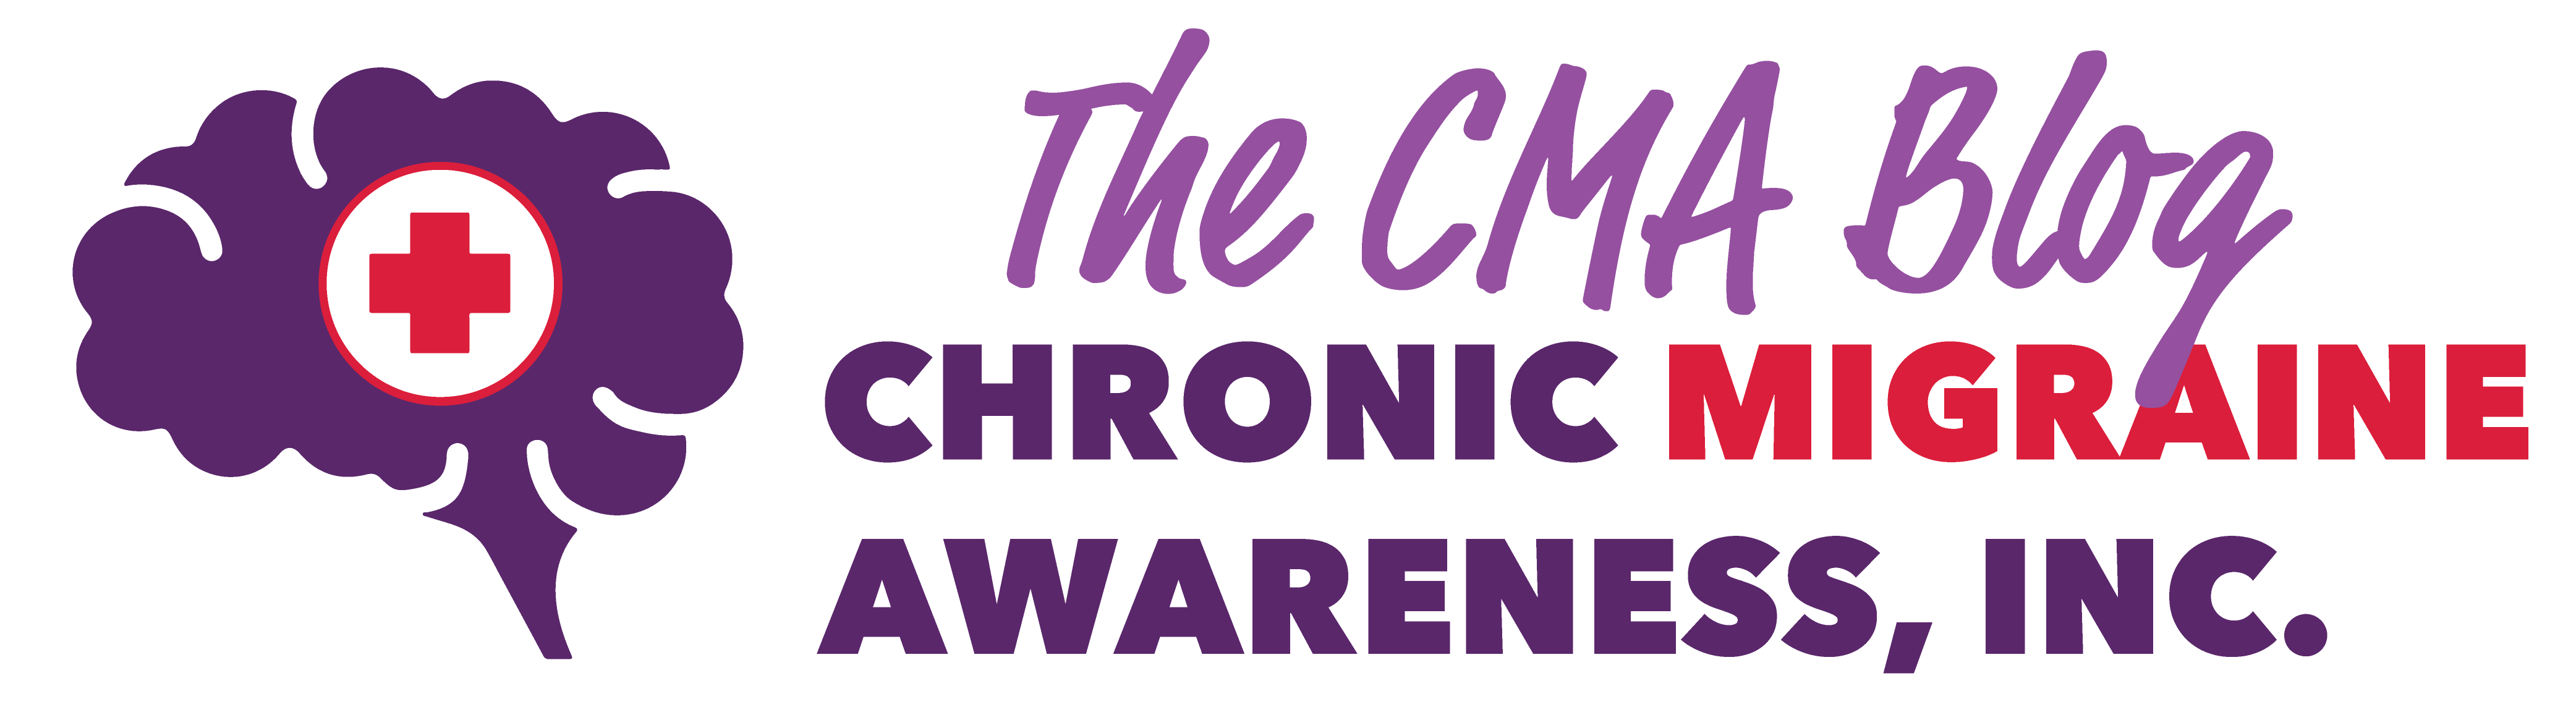 Chronic Migraine Awareness, Inc. Blog